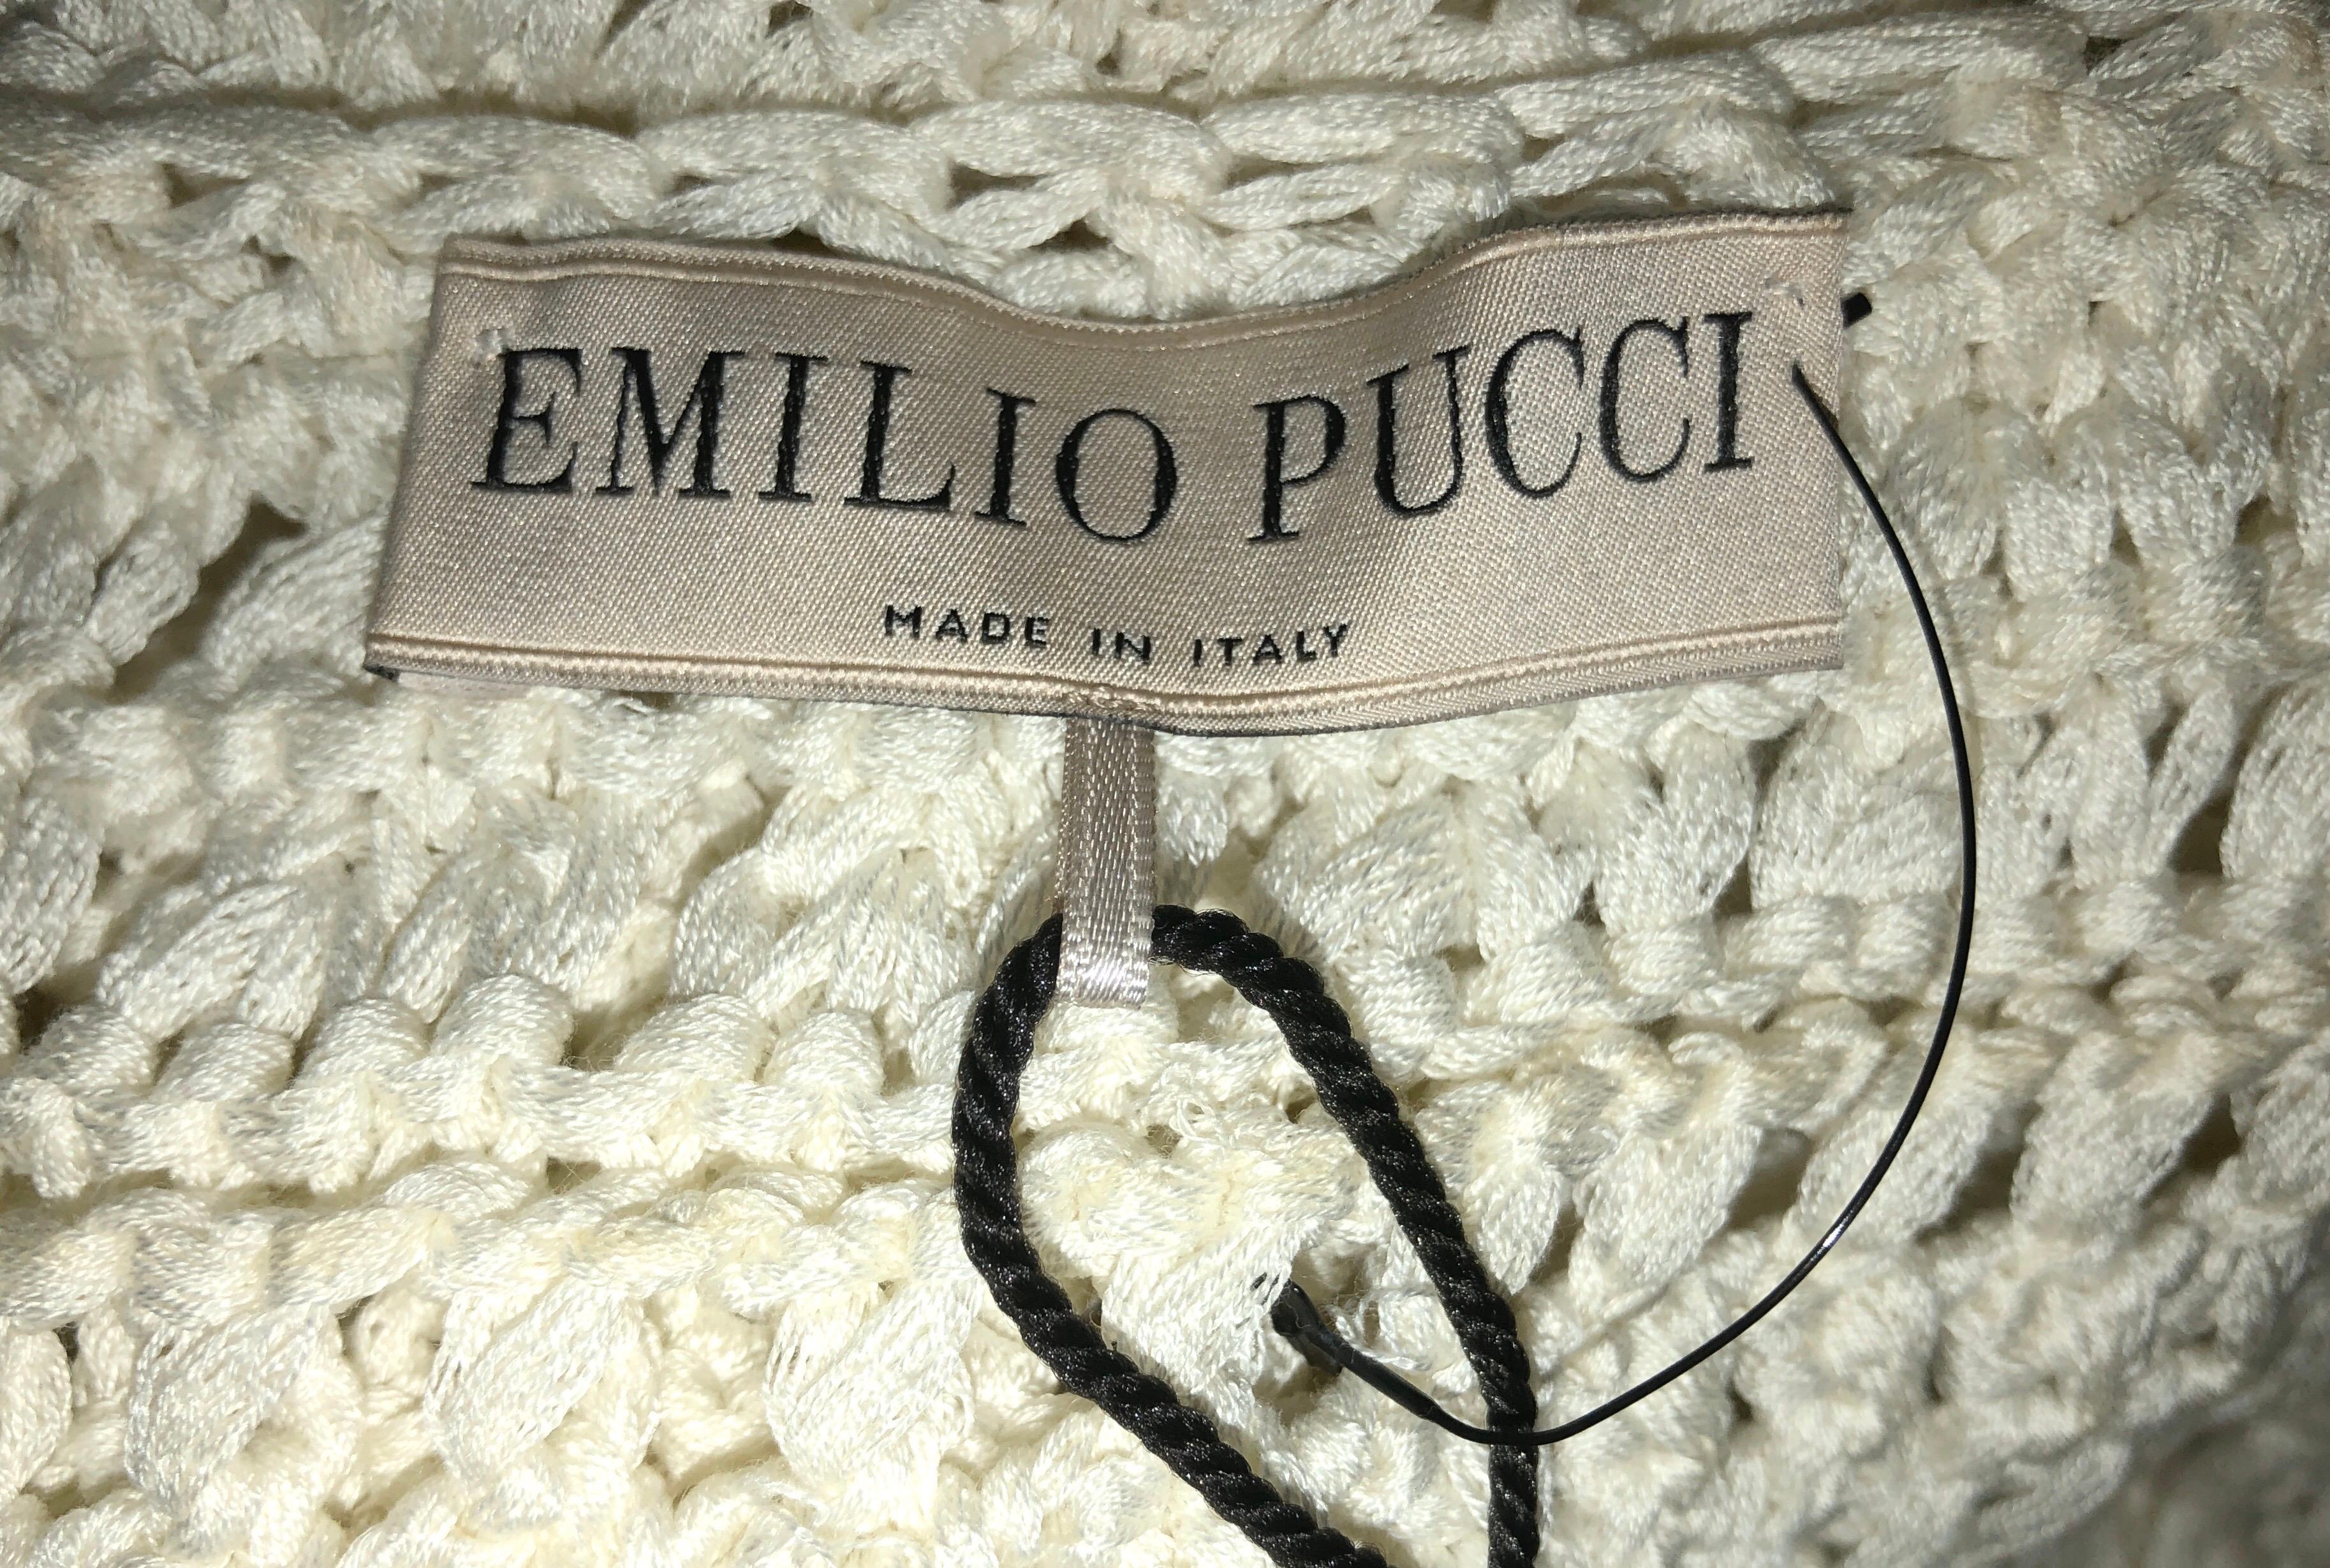 knit crochet maxi dress